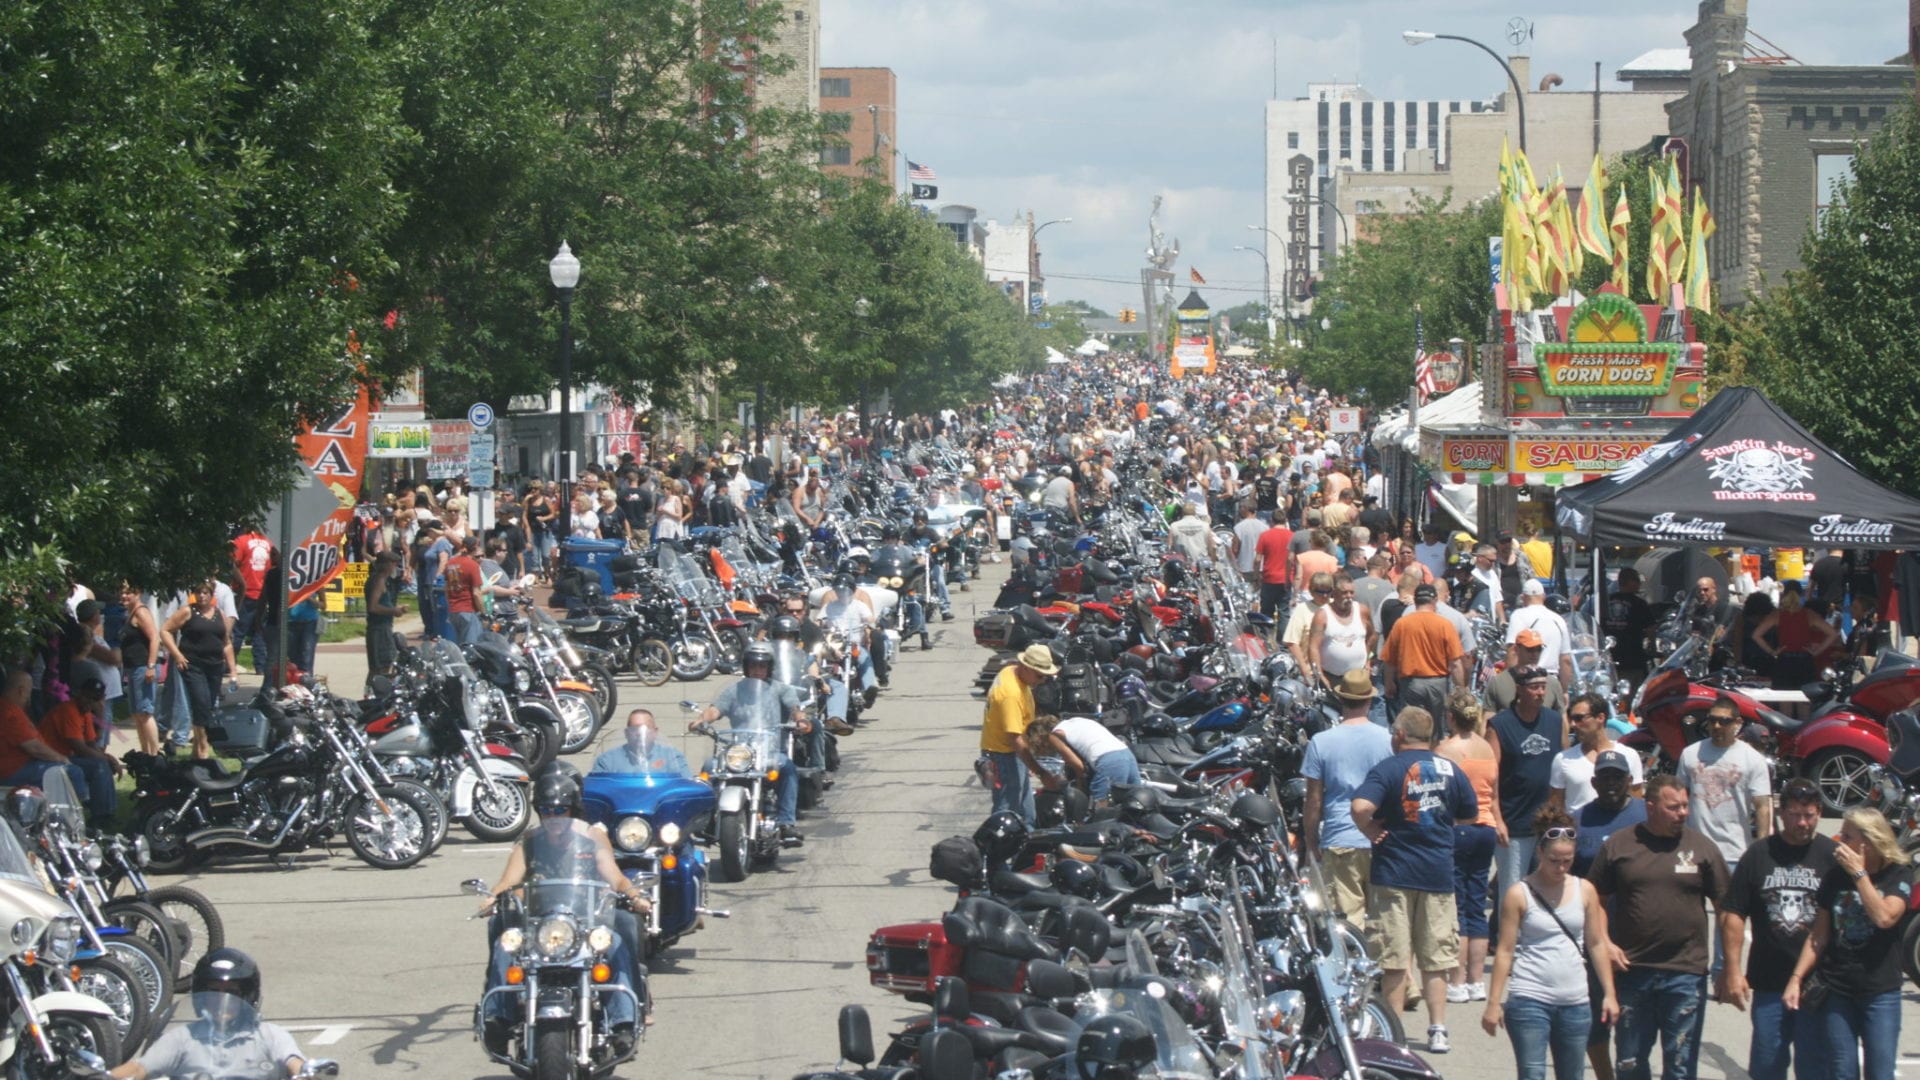 Rebel Road and Bike Time Rallies Returning to Muskegon, Michigan